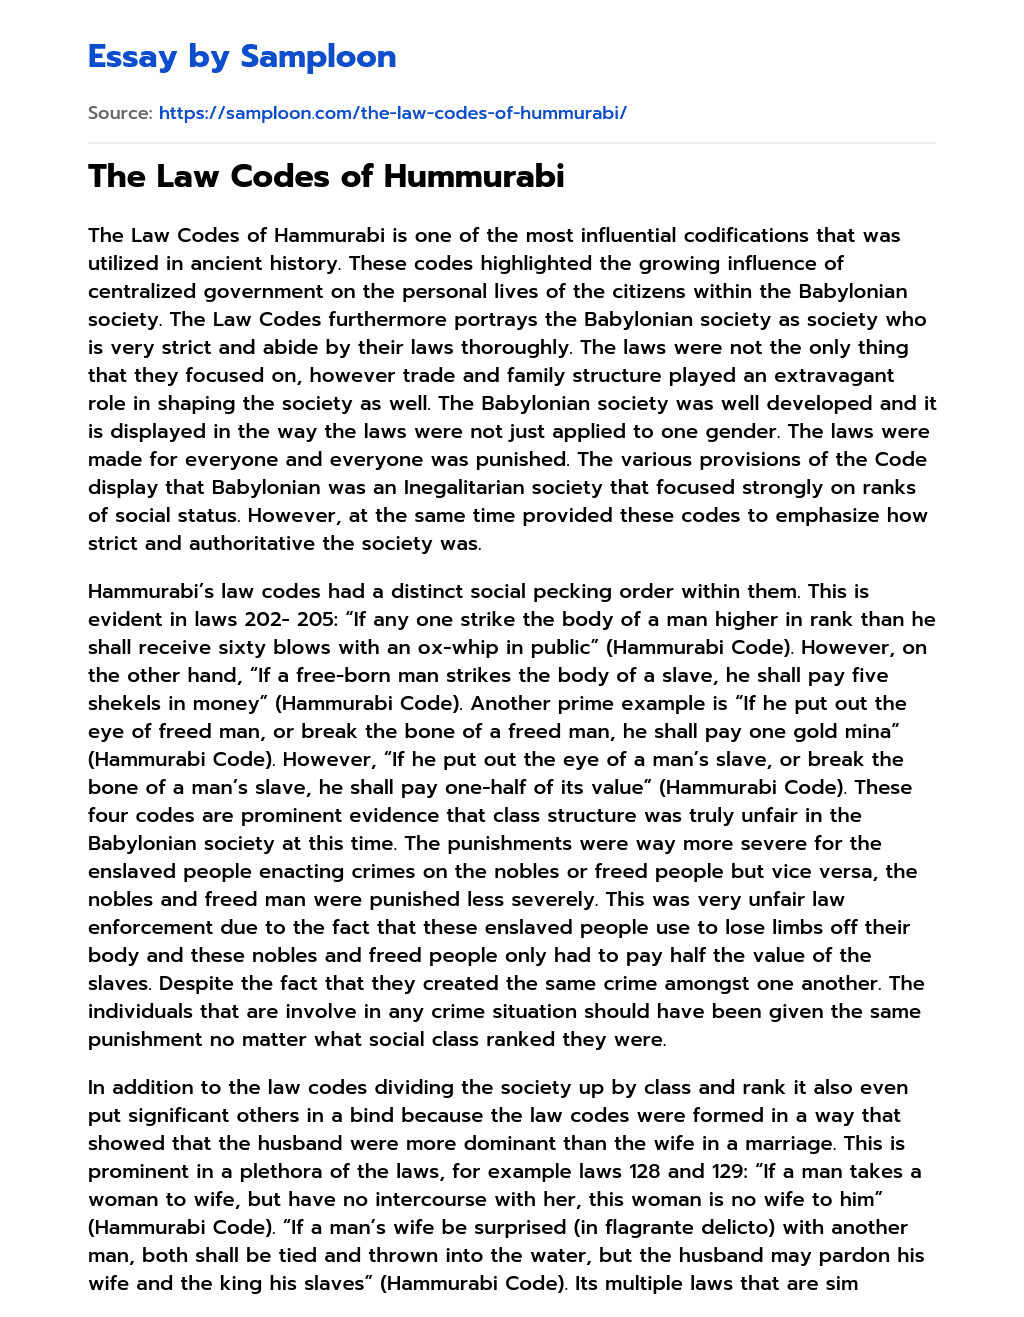 The Law Codes of Hummurabi  essay